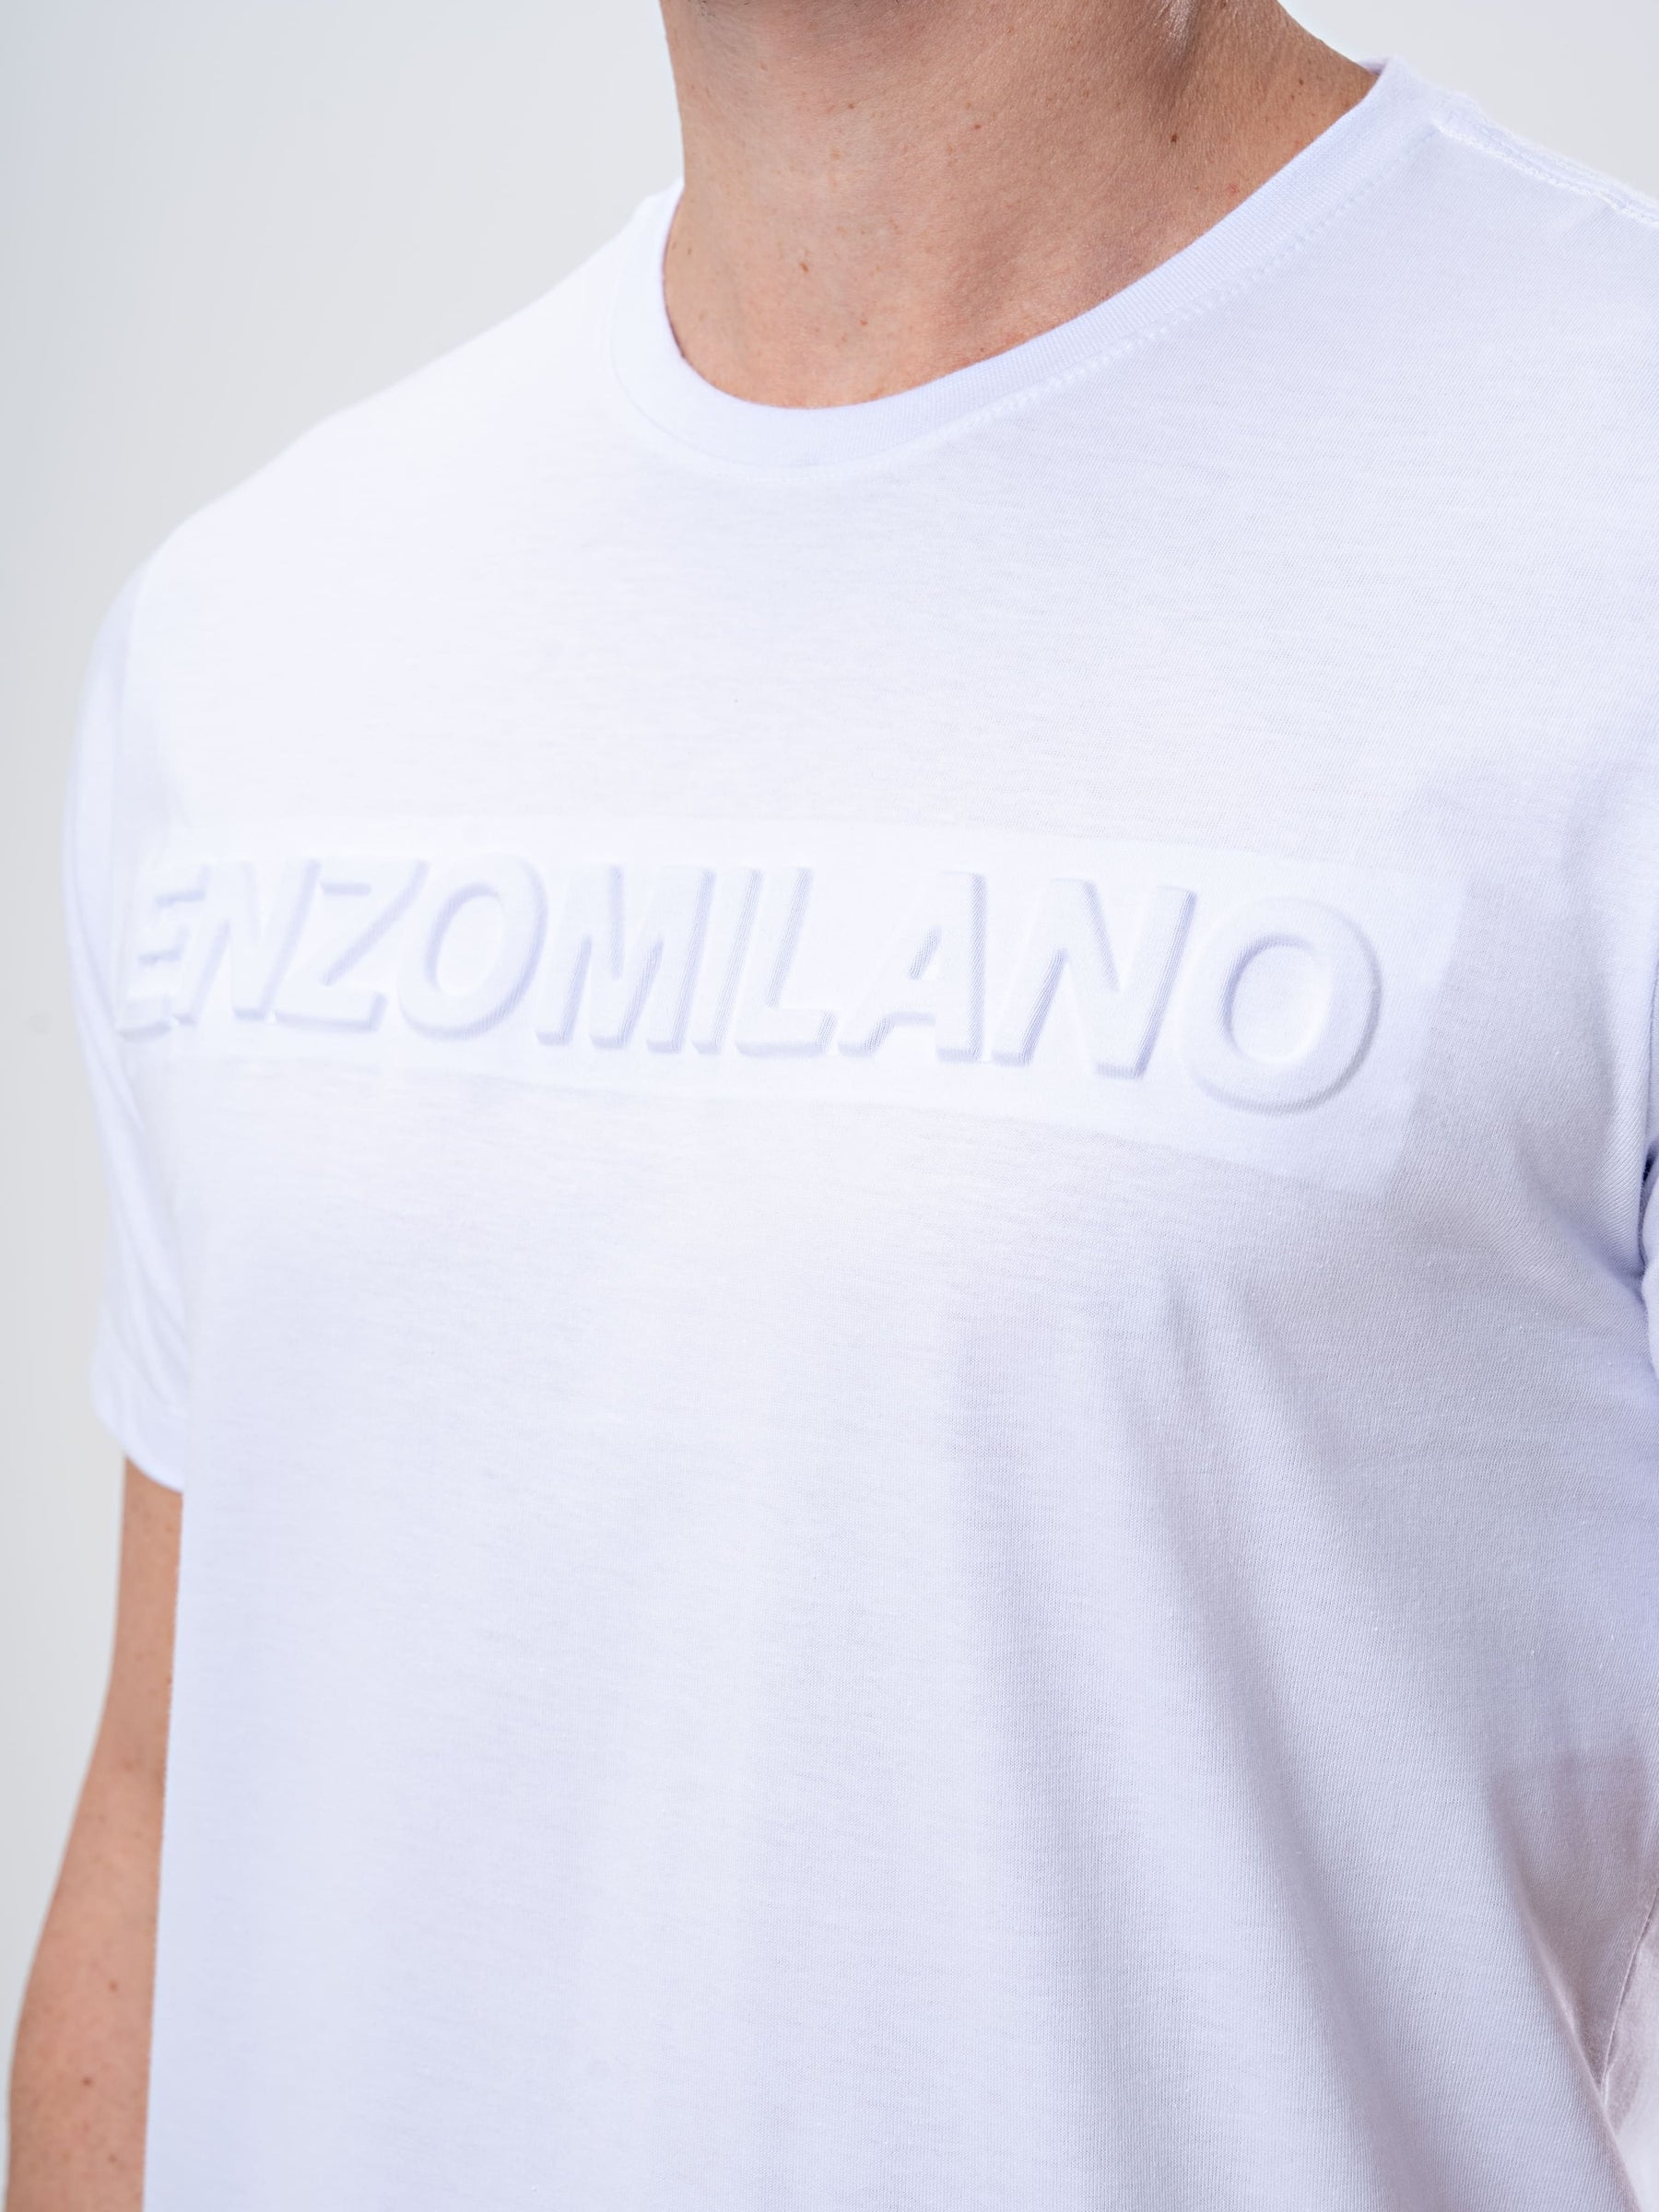 Camiseta Embossed Enzo Milano - Hellik Store